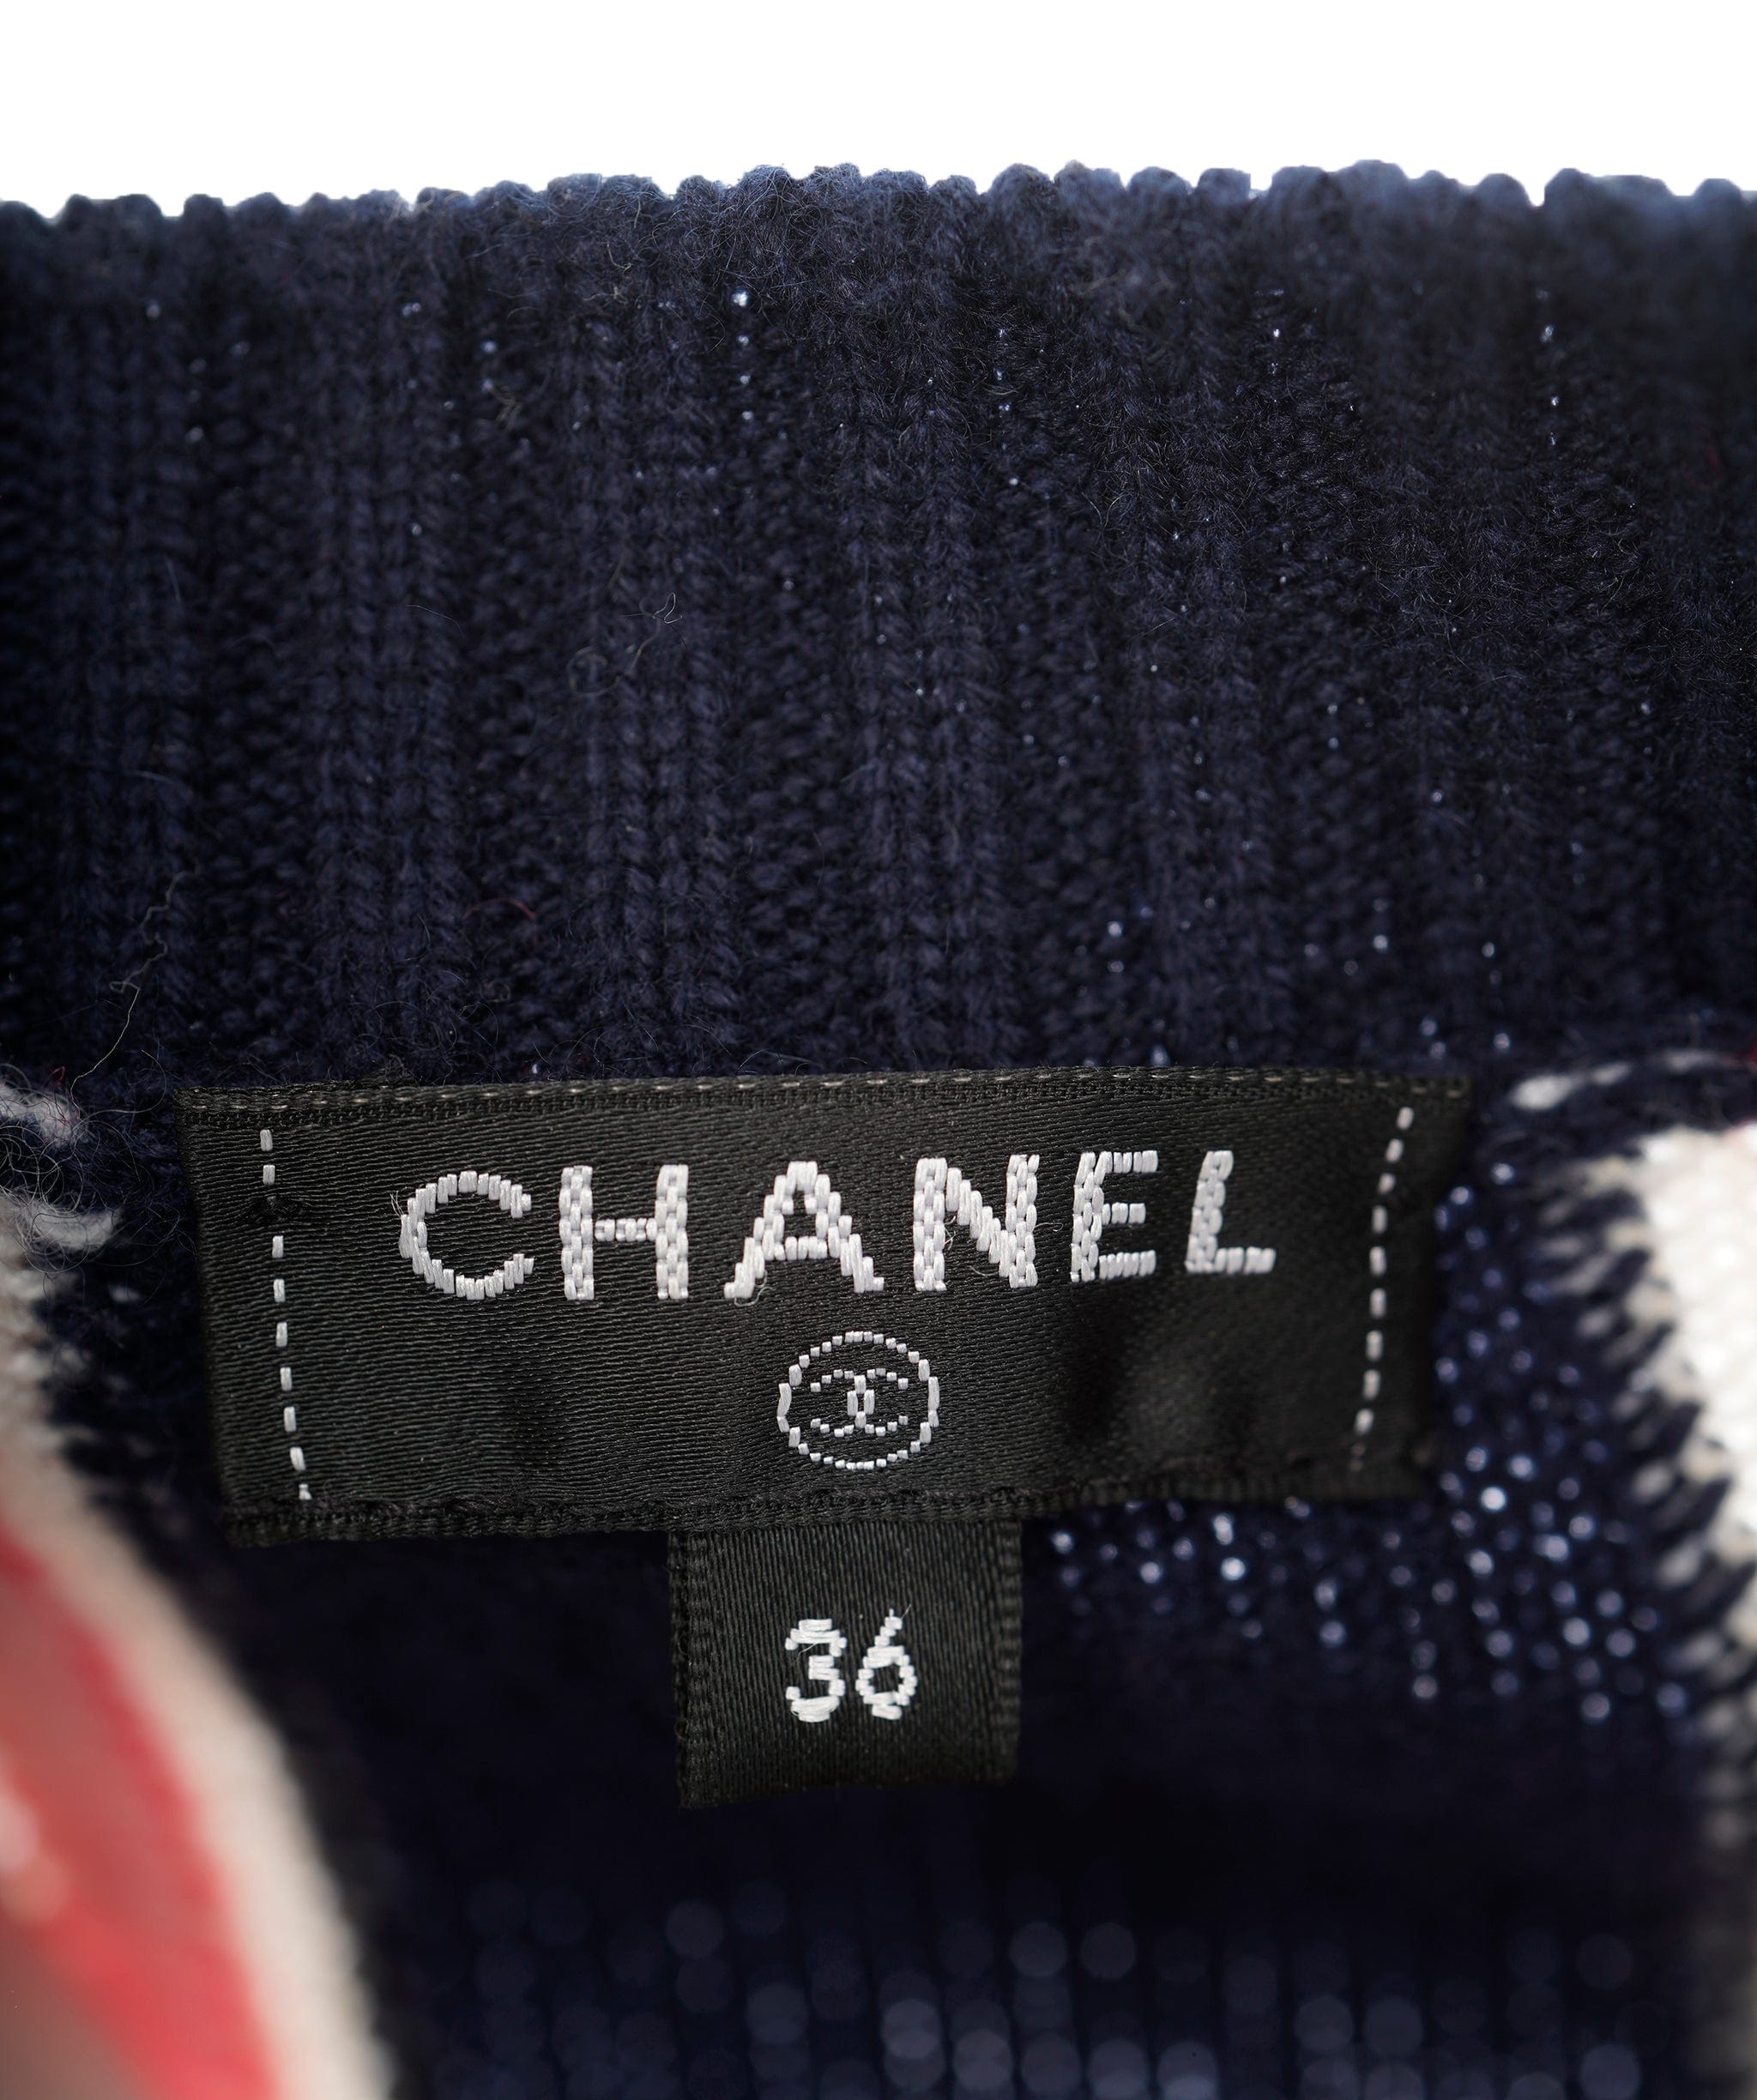 Chanel Chanel Striped Cardigan UKL1418